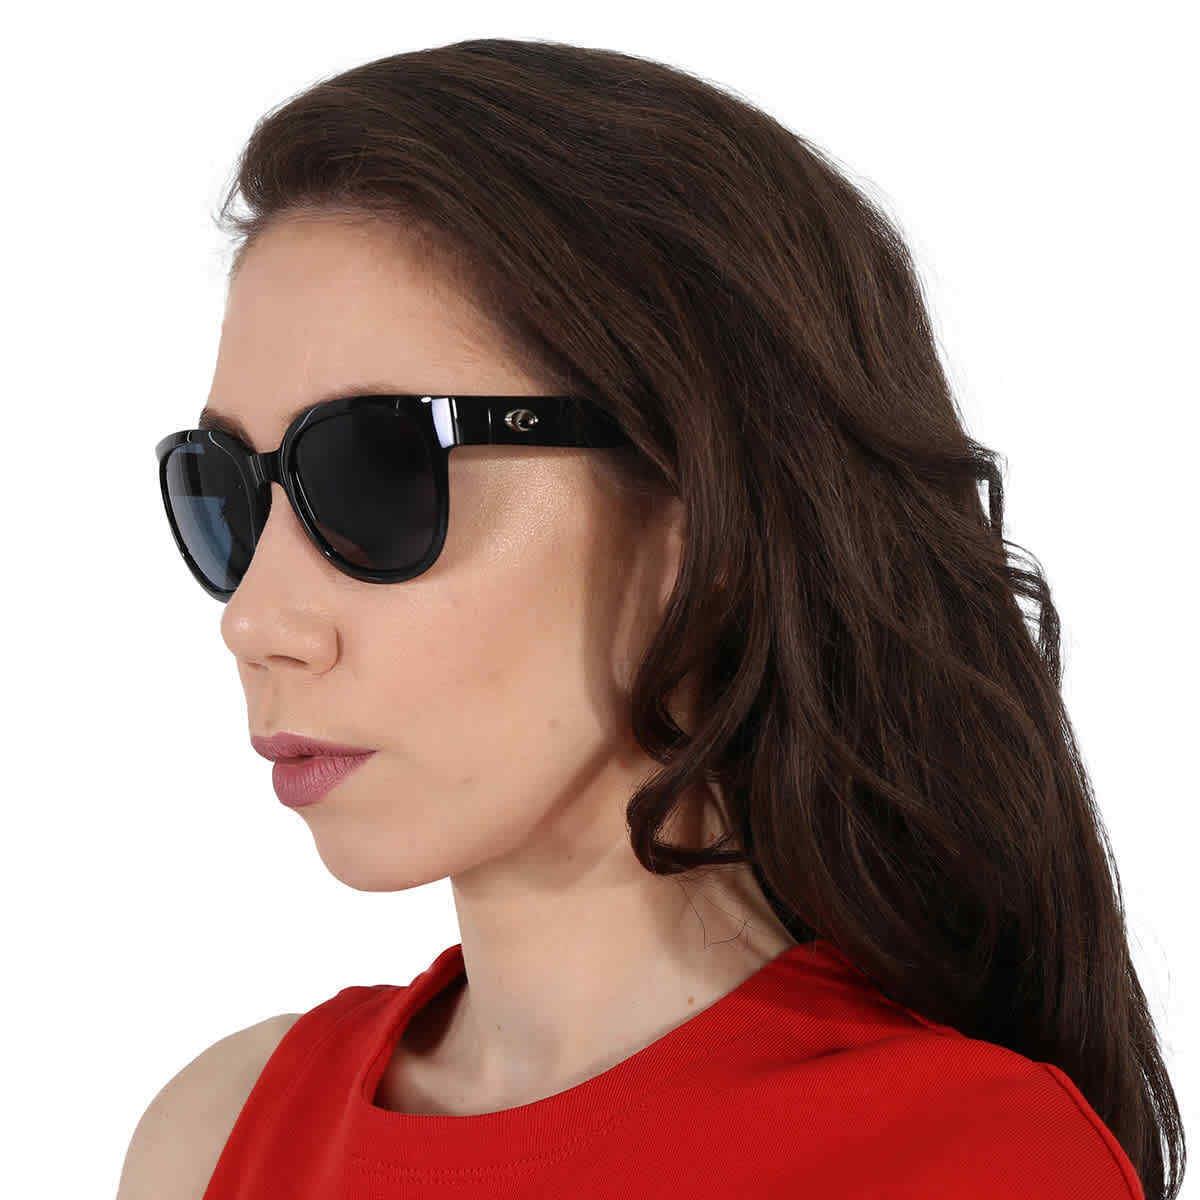 Costa Del Mar Salina Grey Polarized Polycarbonate Ladies Sunglasses 6S9051